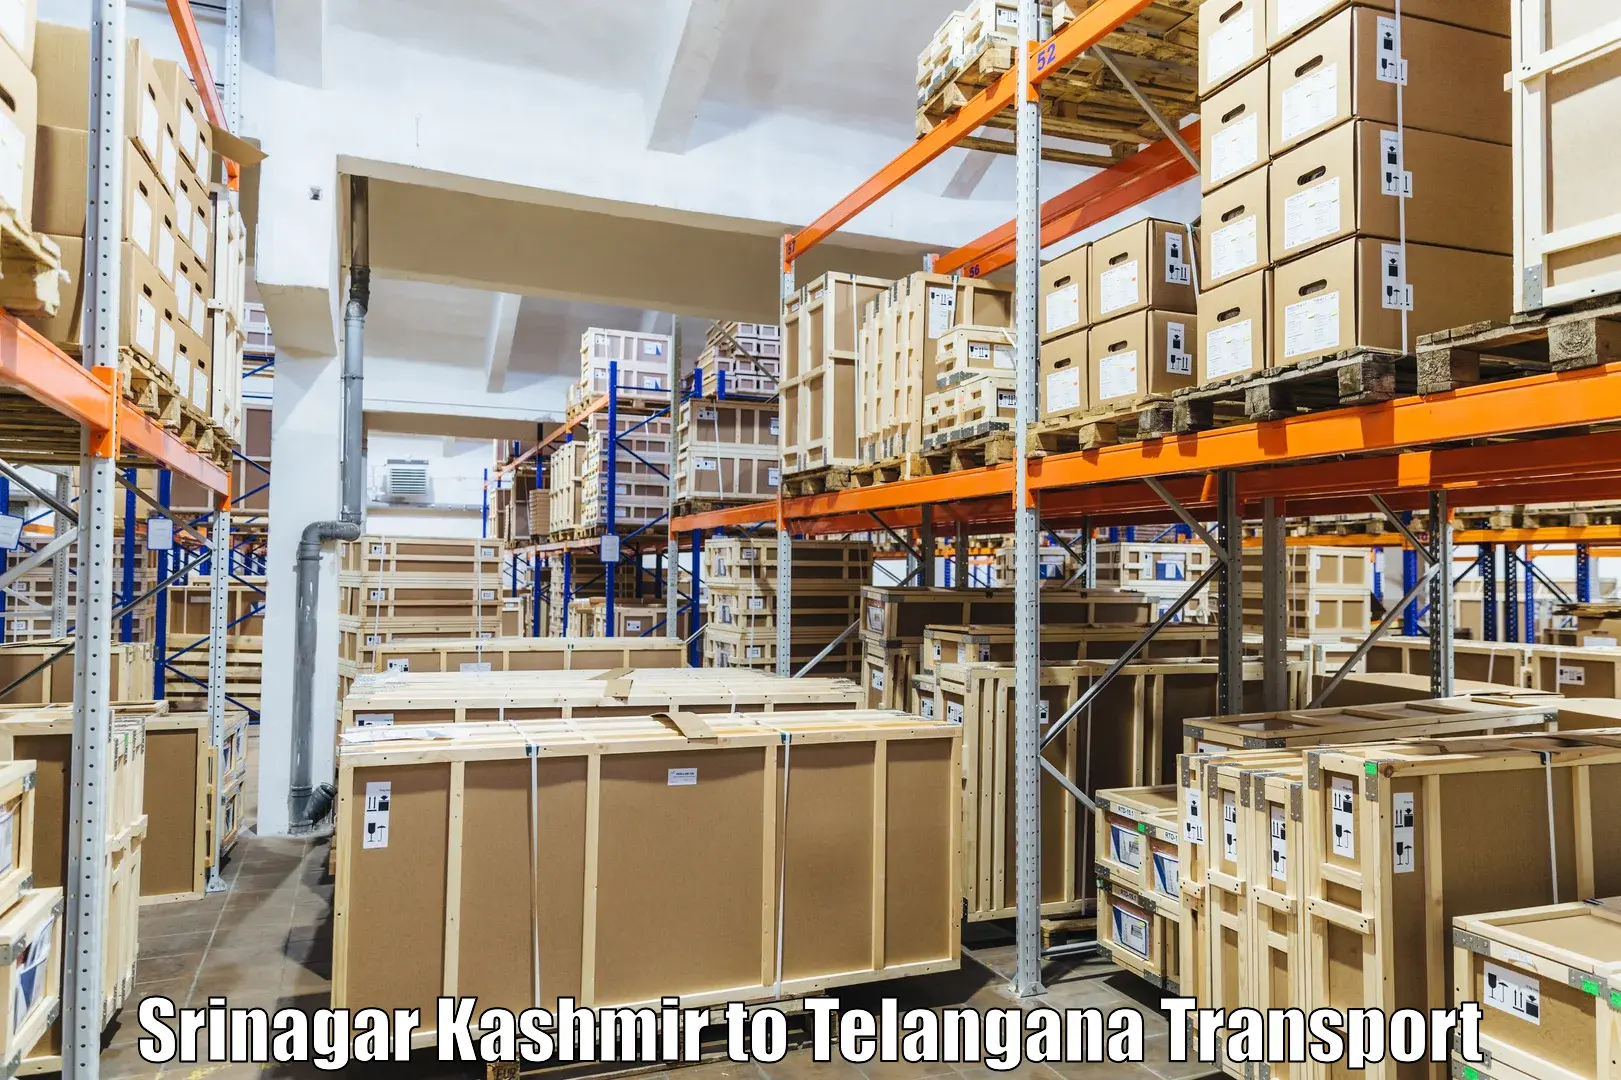 Daily parcel service transport Srinagar Kashmir to Bhainsa